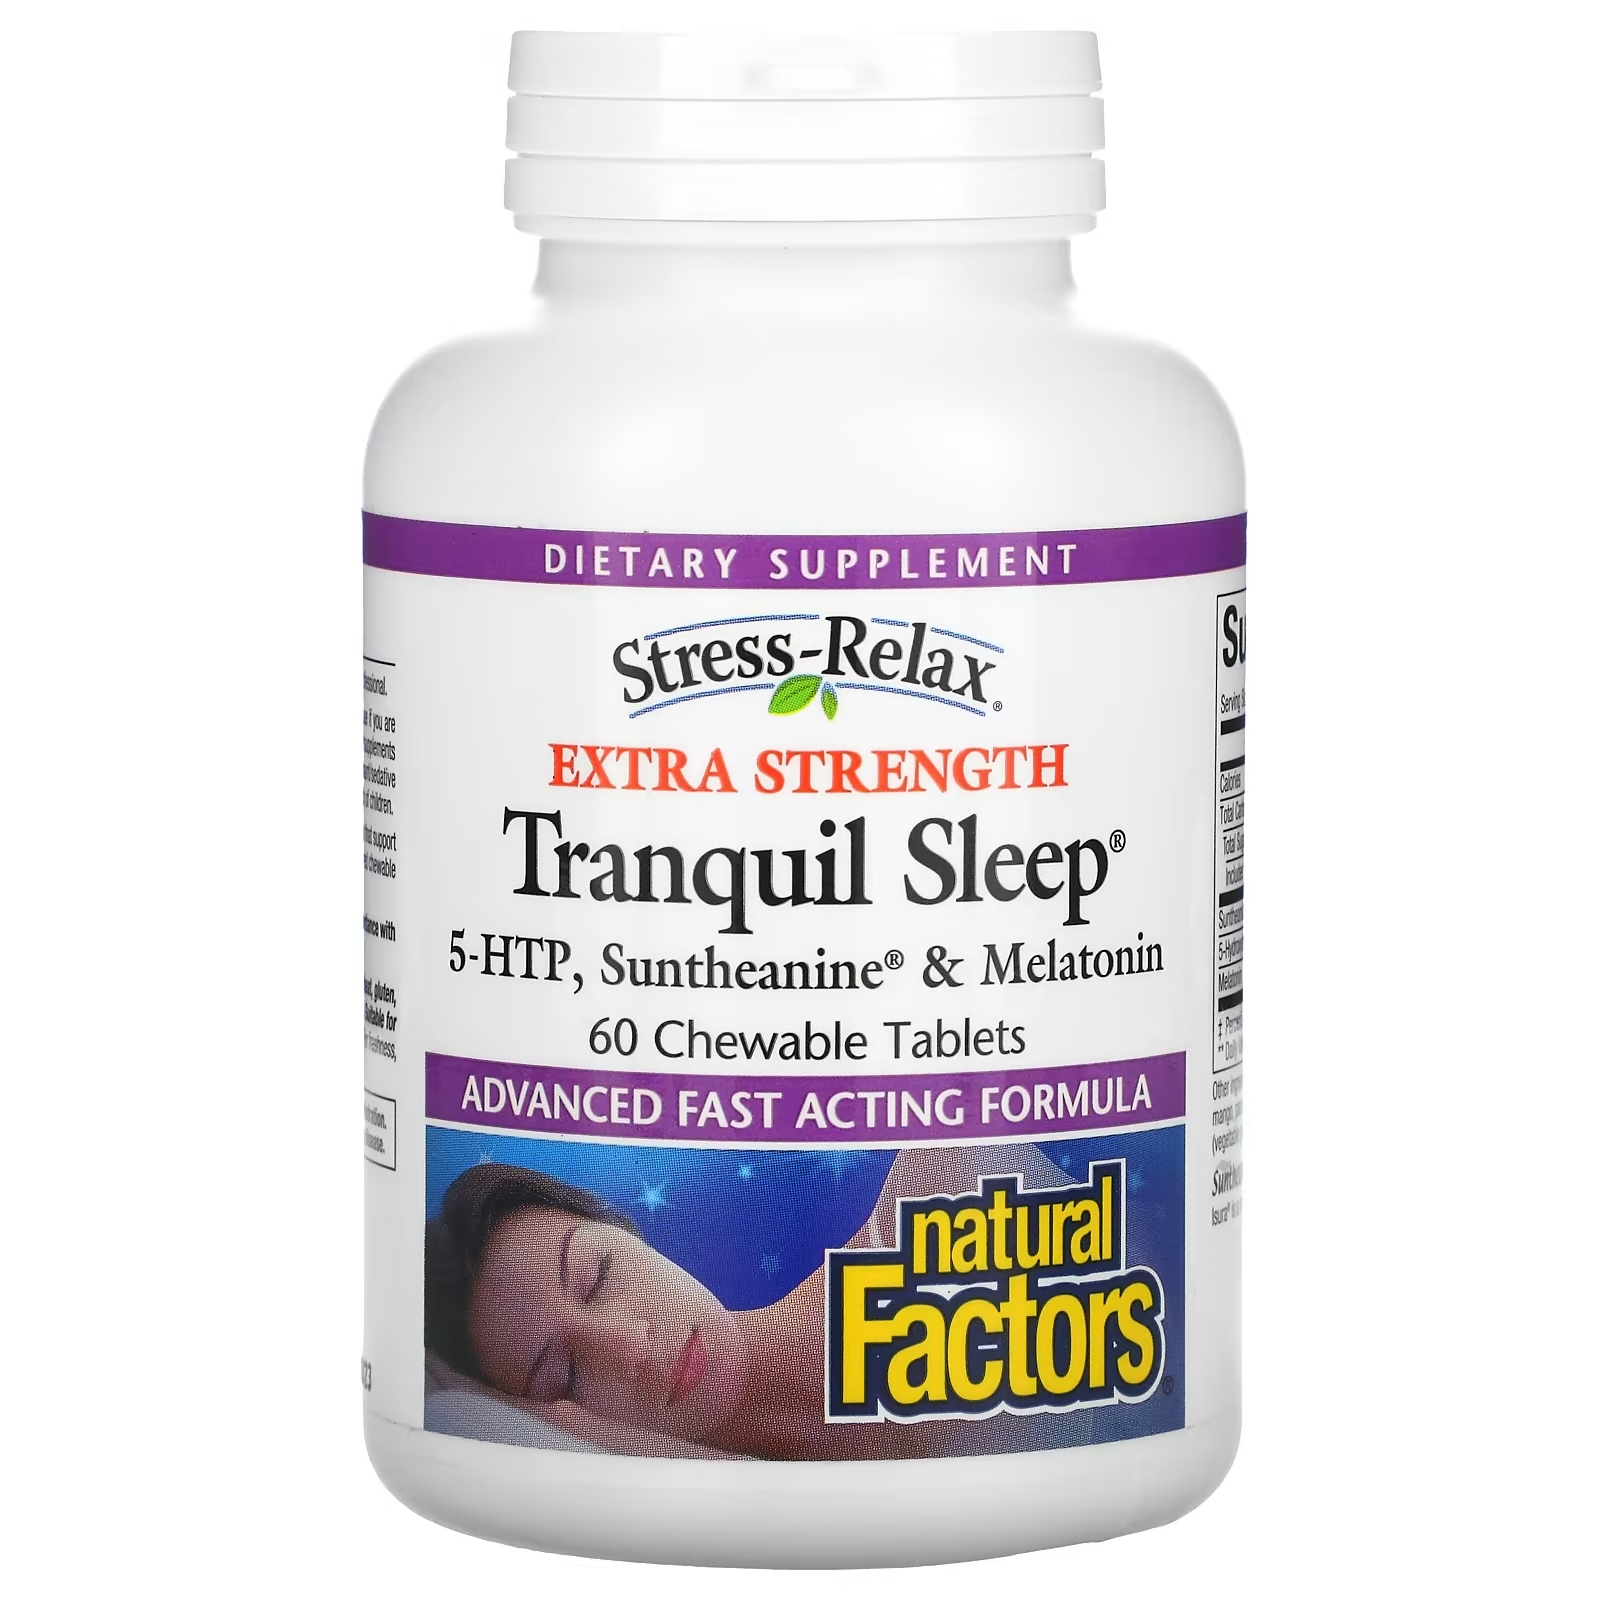 Natural Factors Stress-Relax Tranquil Sleep экстра сила, 60 жевательных таблеток